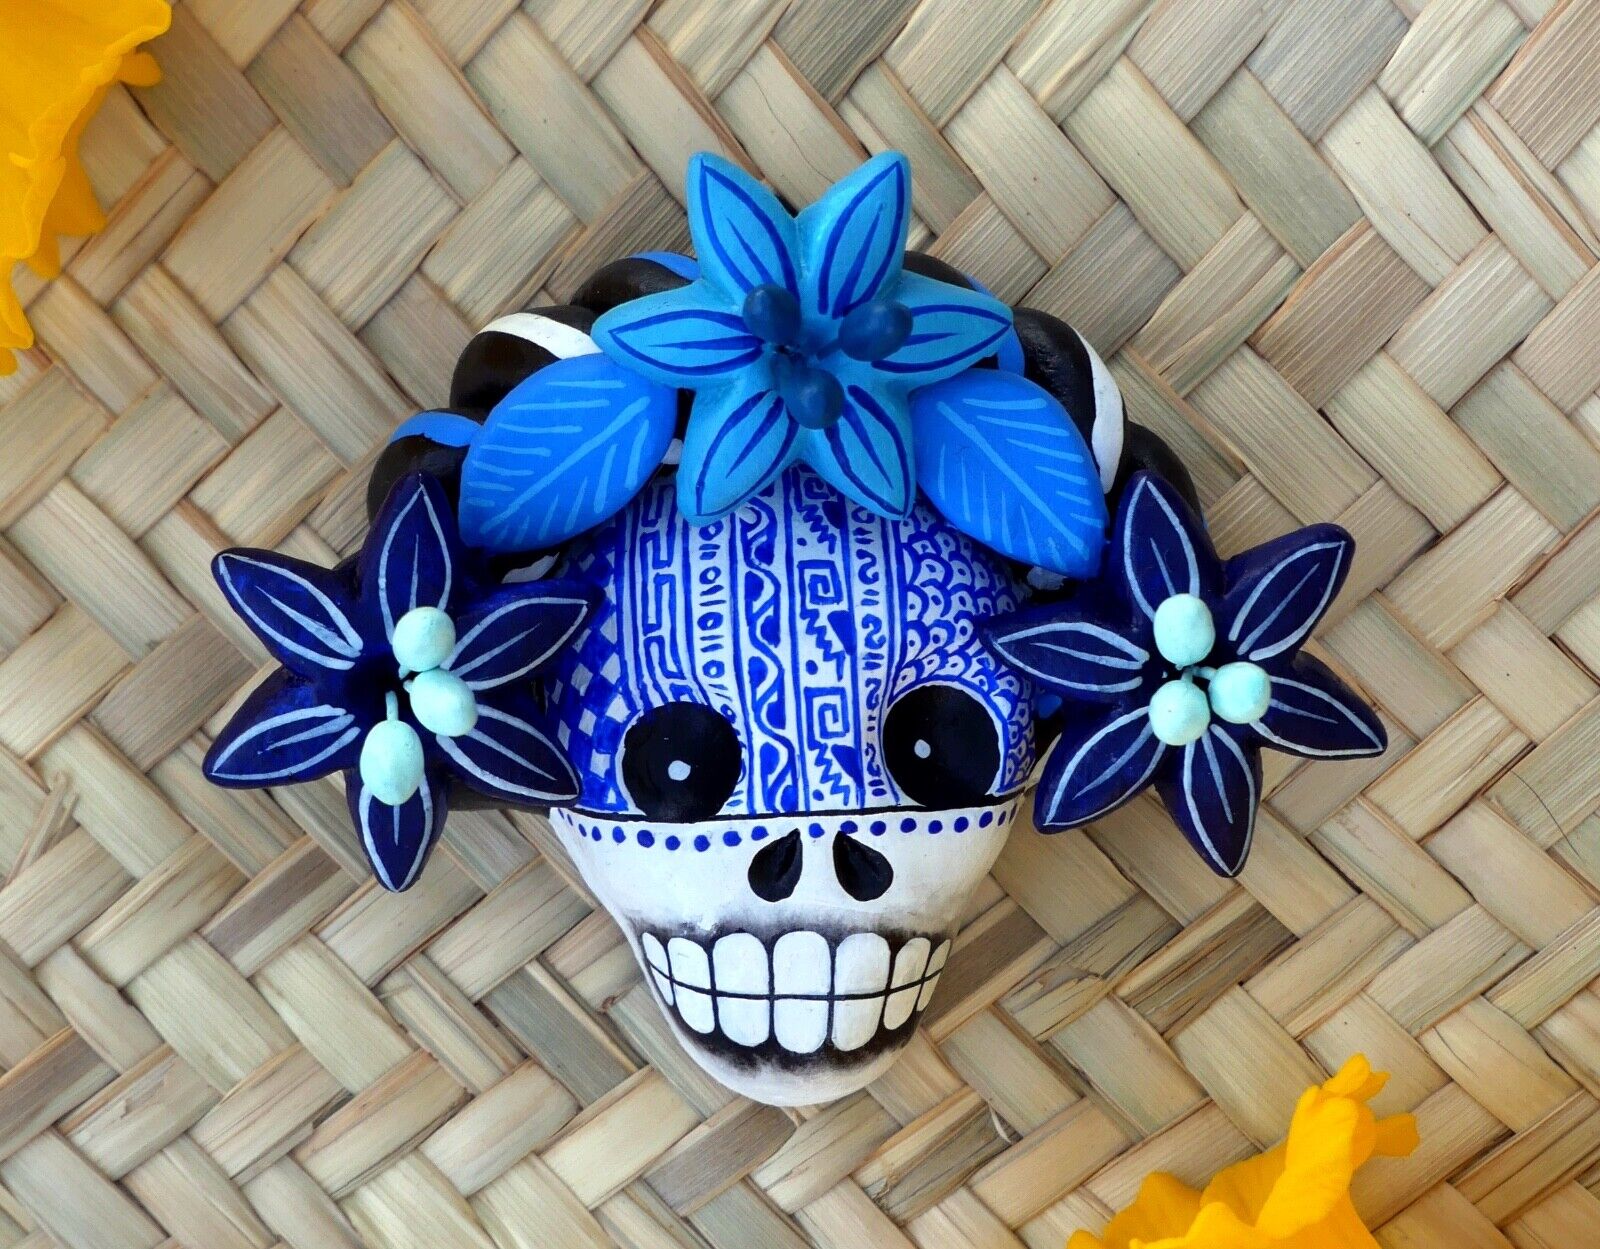 Sm Sugar Skull Wall Ornament Day of the Dead Handmade Puebla Mexican Folk Art